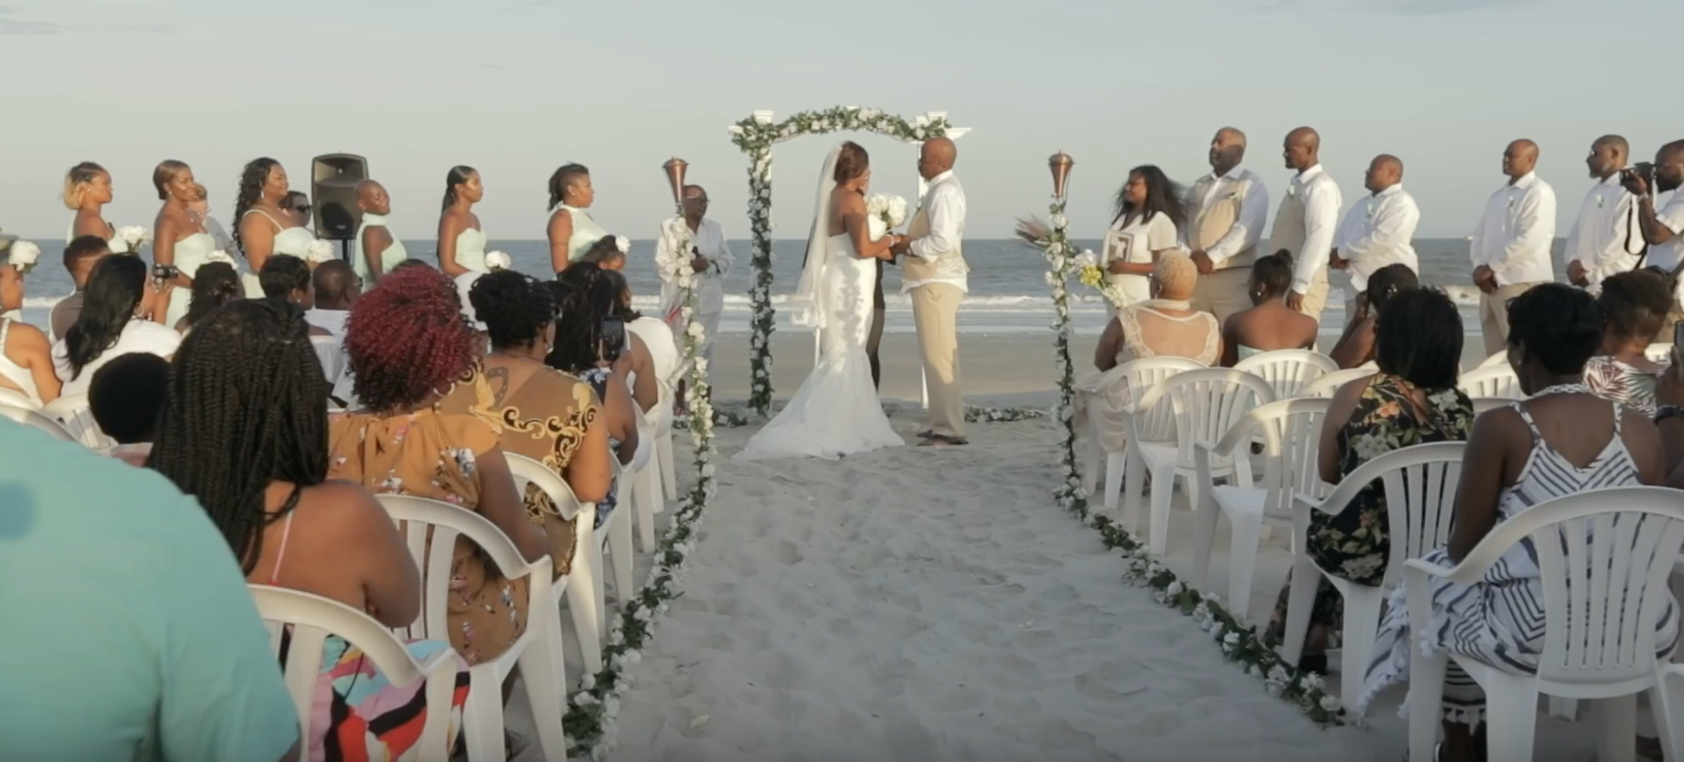 Surfside Beach Wedding Video